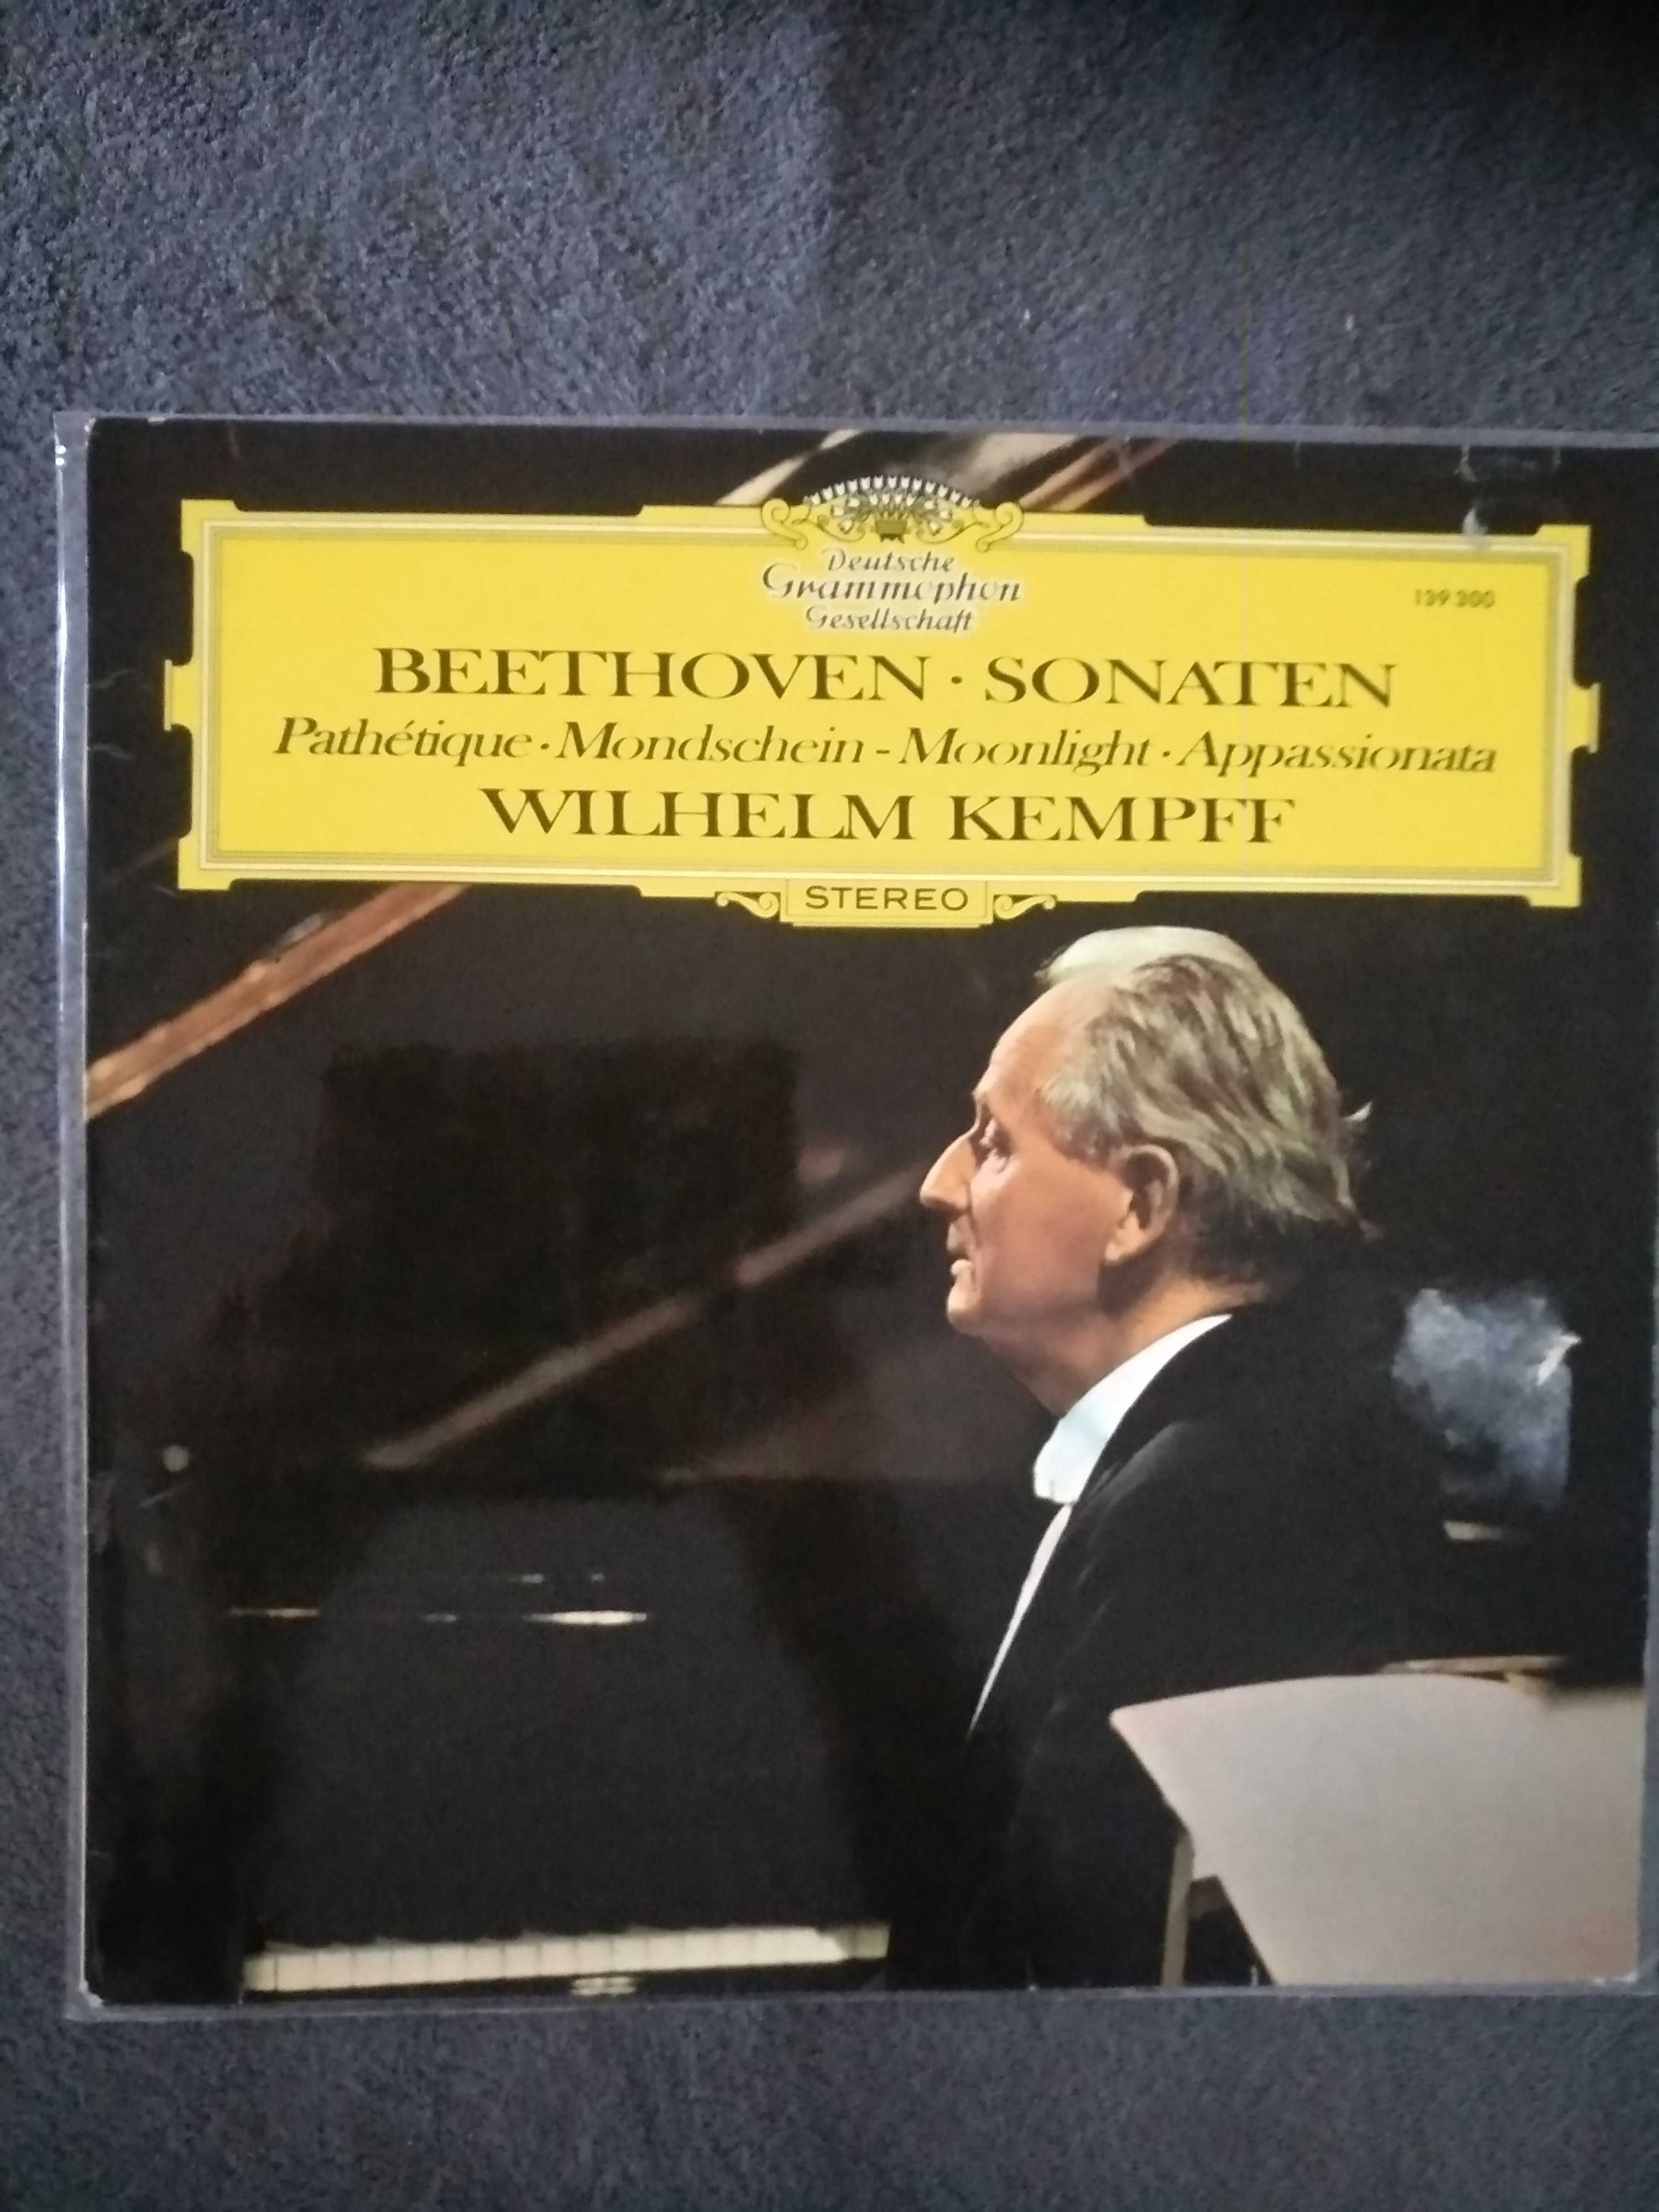 Beethoven/Kempff /Pathetique/Mondschein/ Moonlight/Appassionata